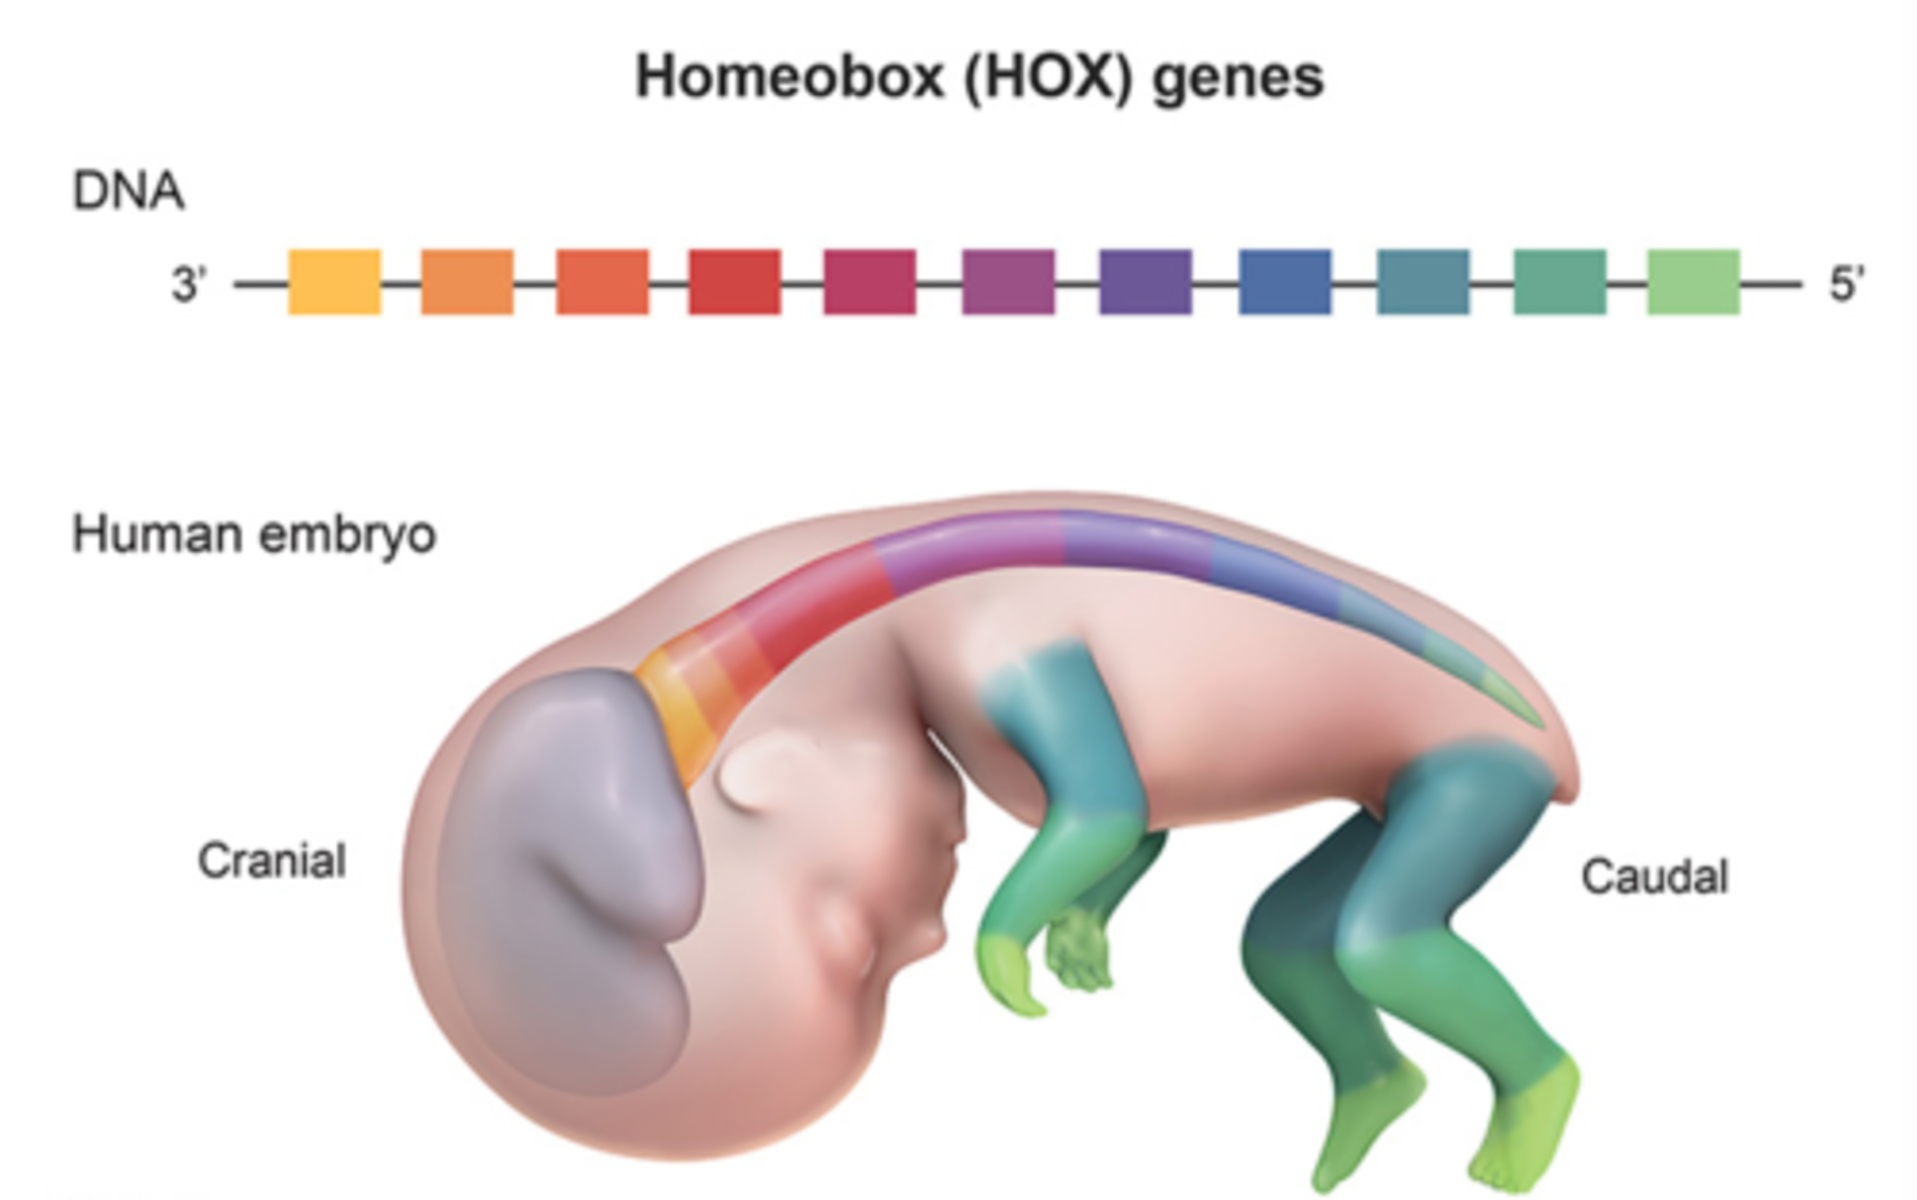 homeotic genes